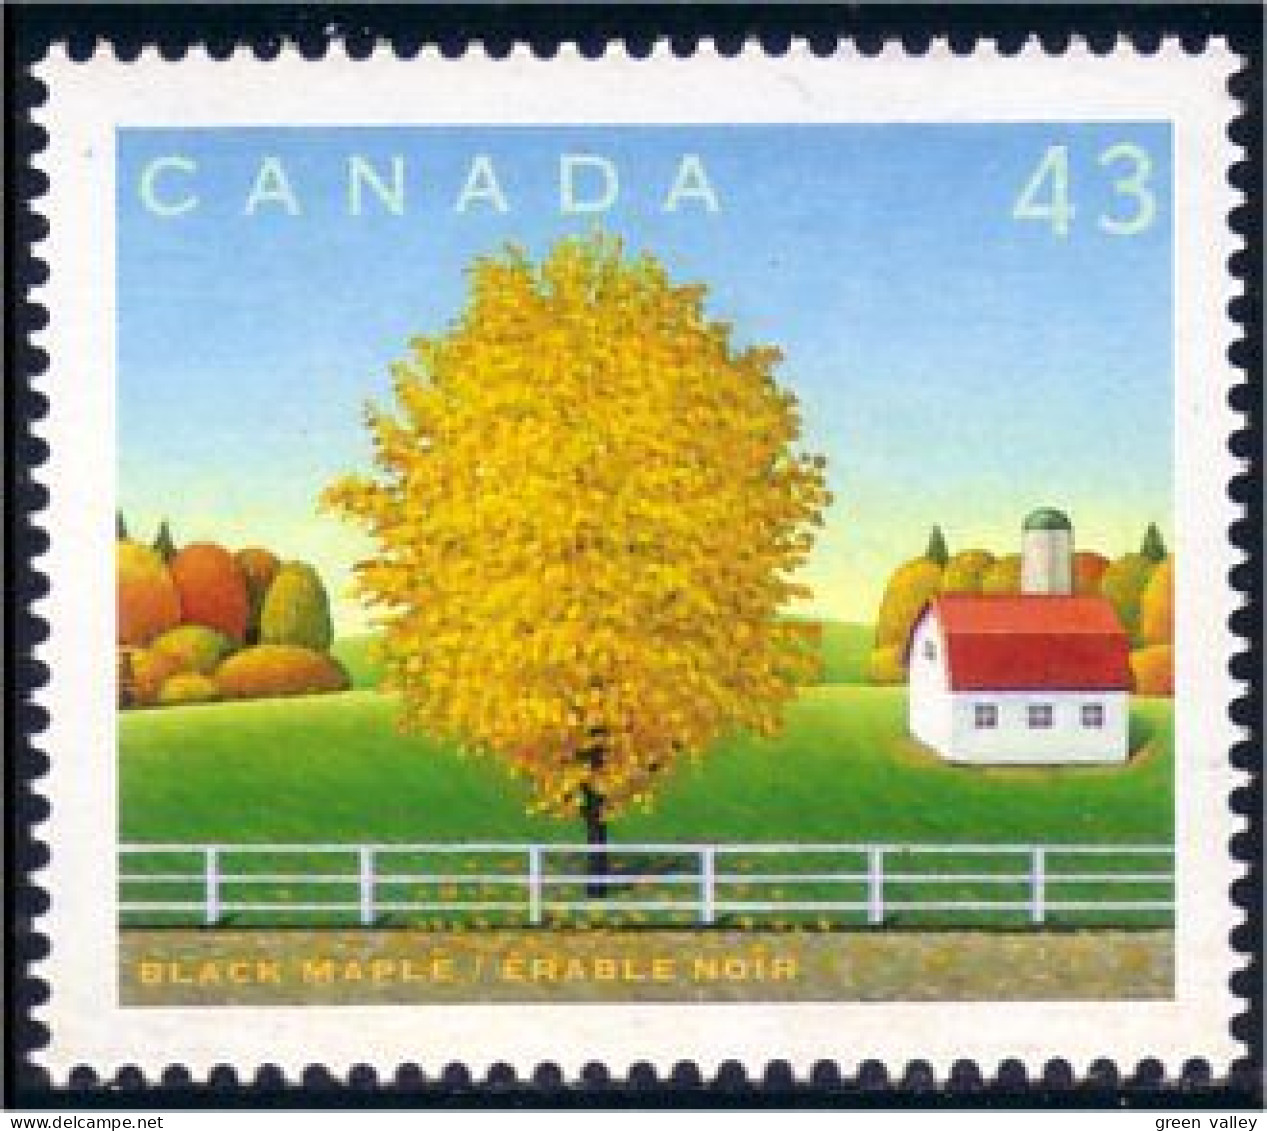 Canada Arbre Erable Noir Black Maple Tree MNH ** Neuf SC (C15-24gb) - Trees